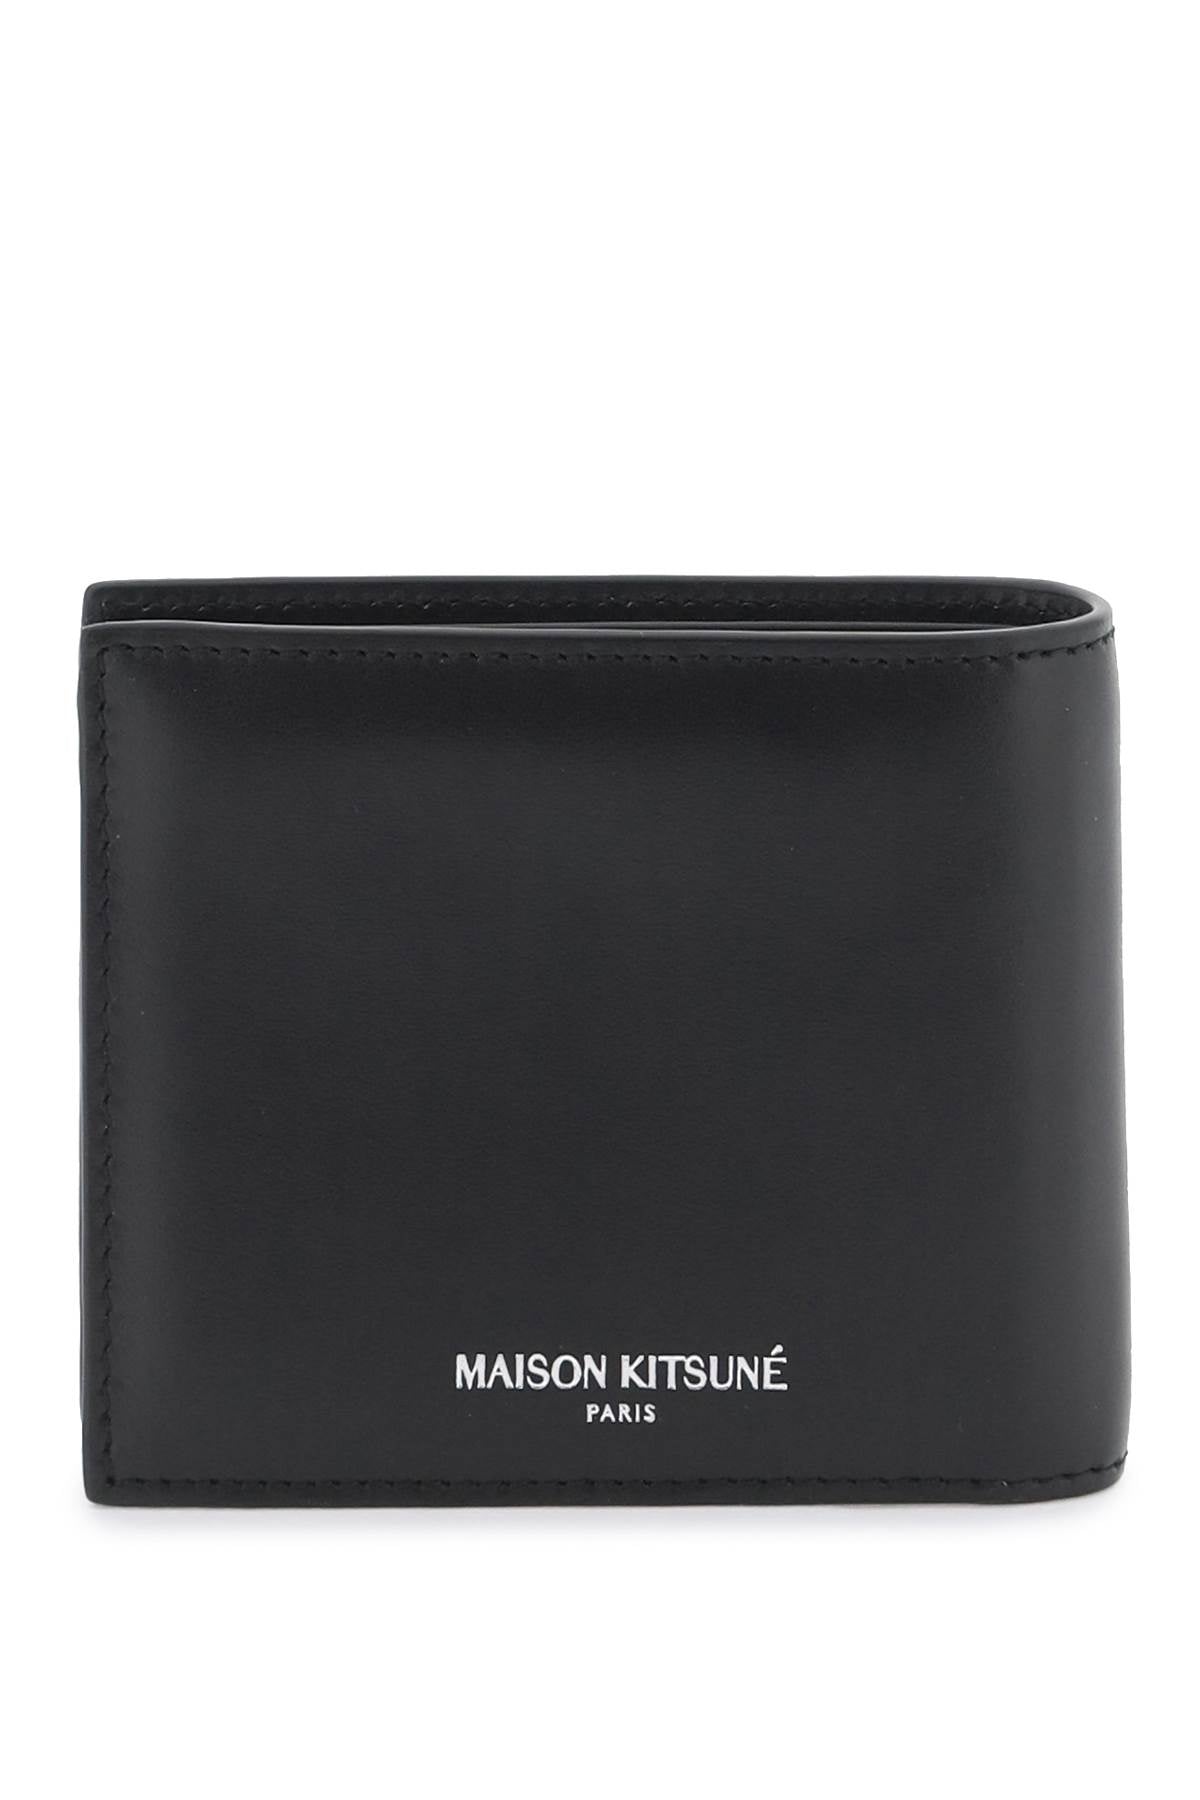 Maison Kitsune Fox Head Bi Fold Wallet   Black